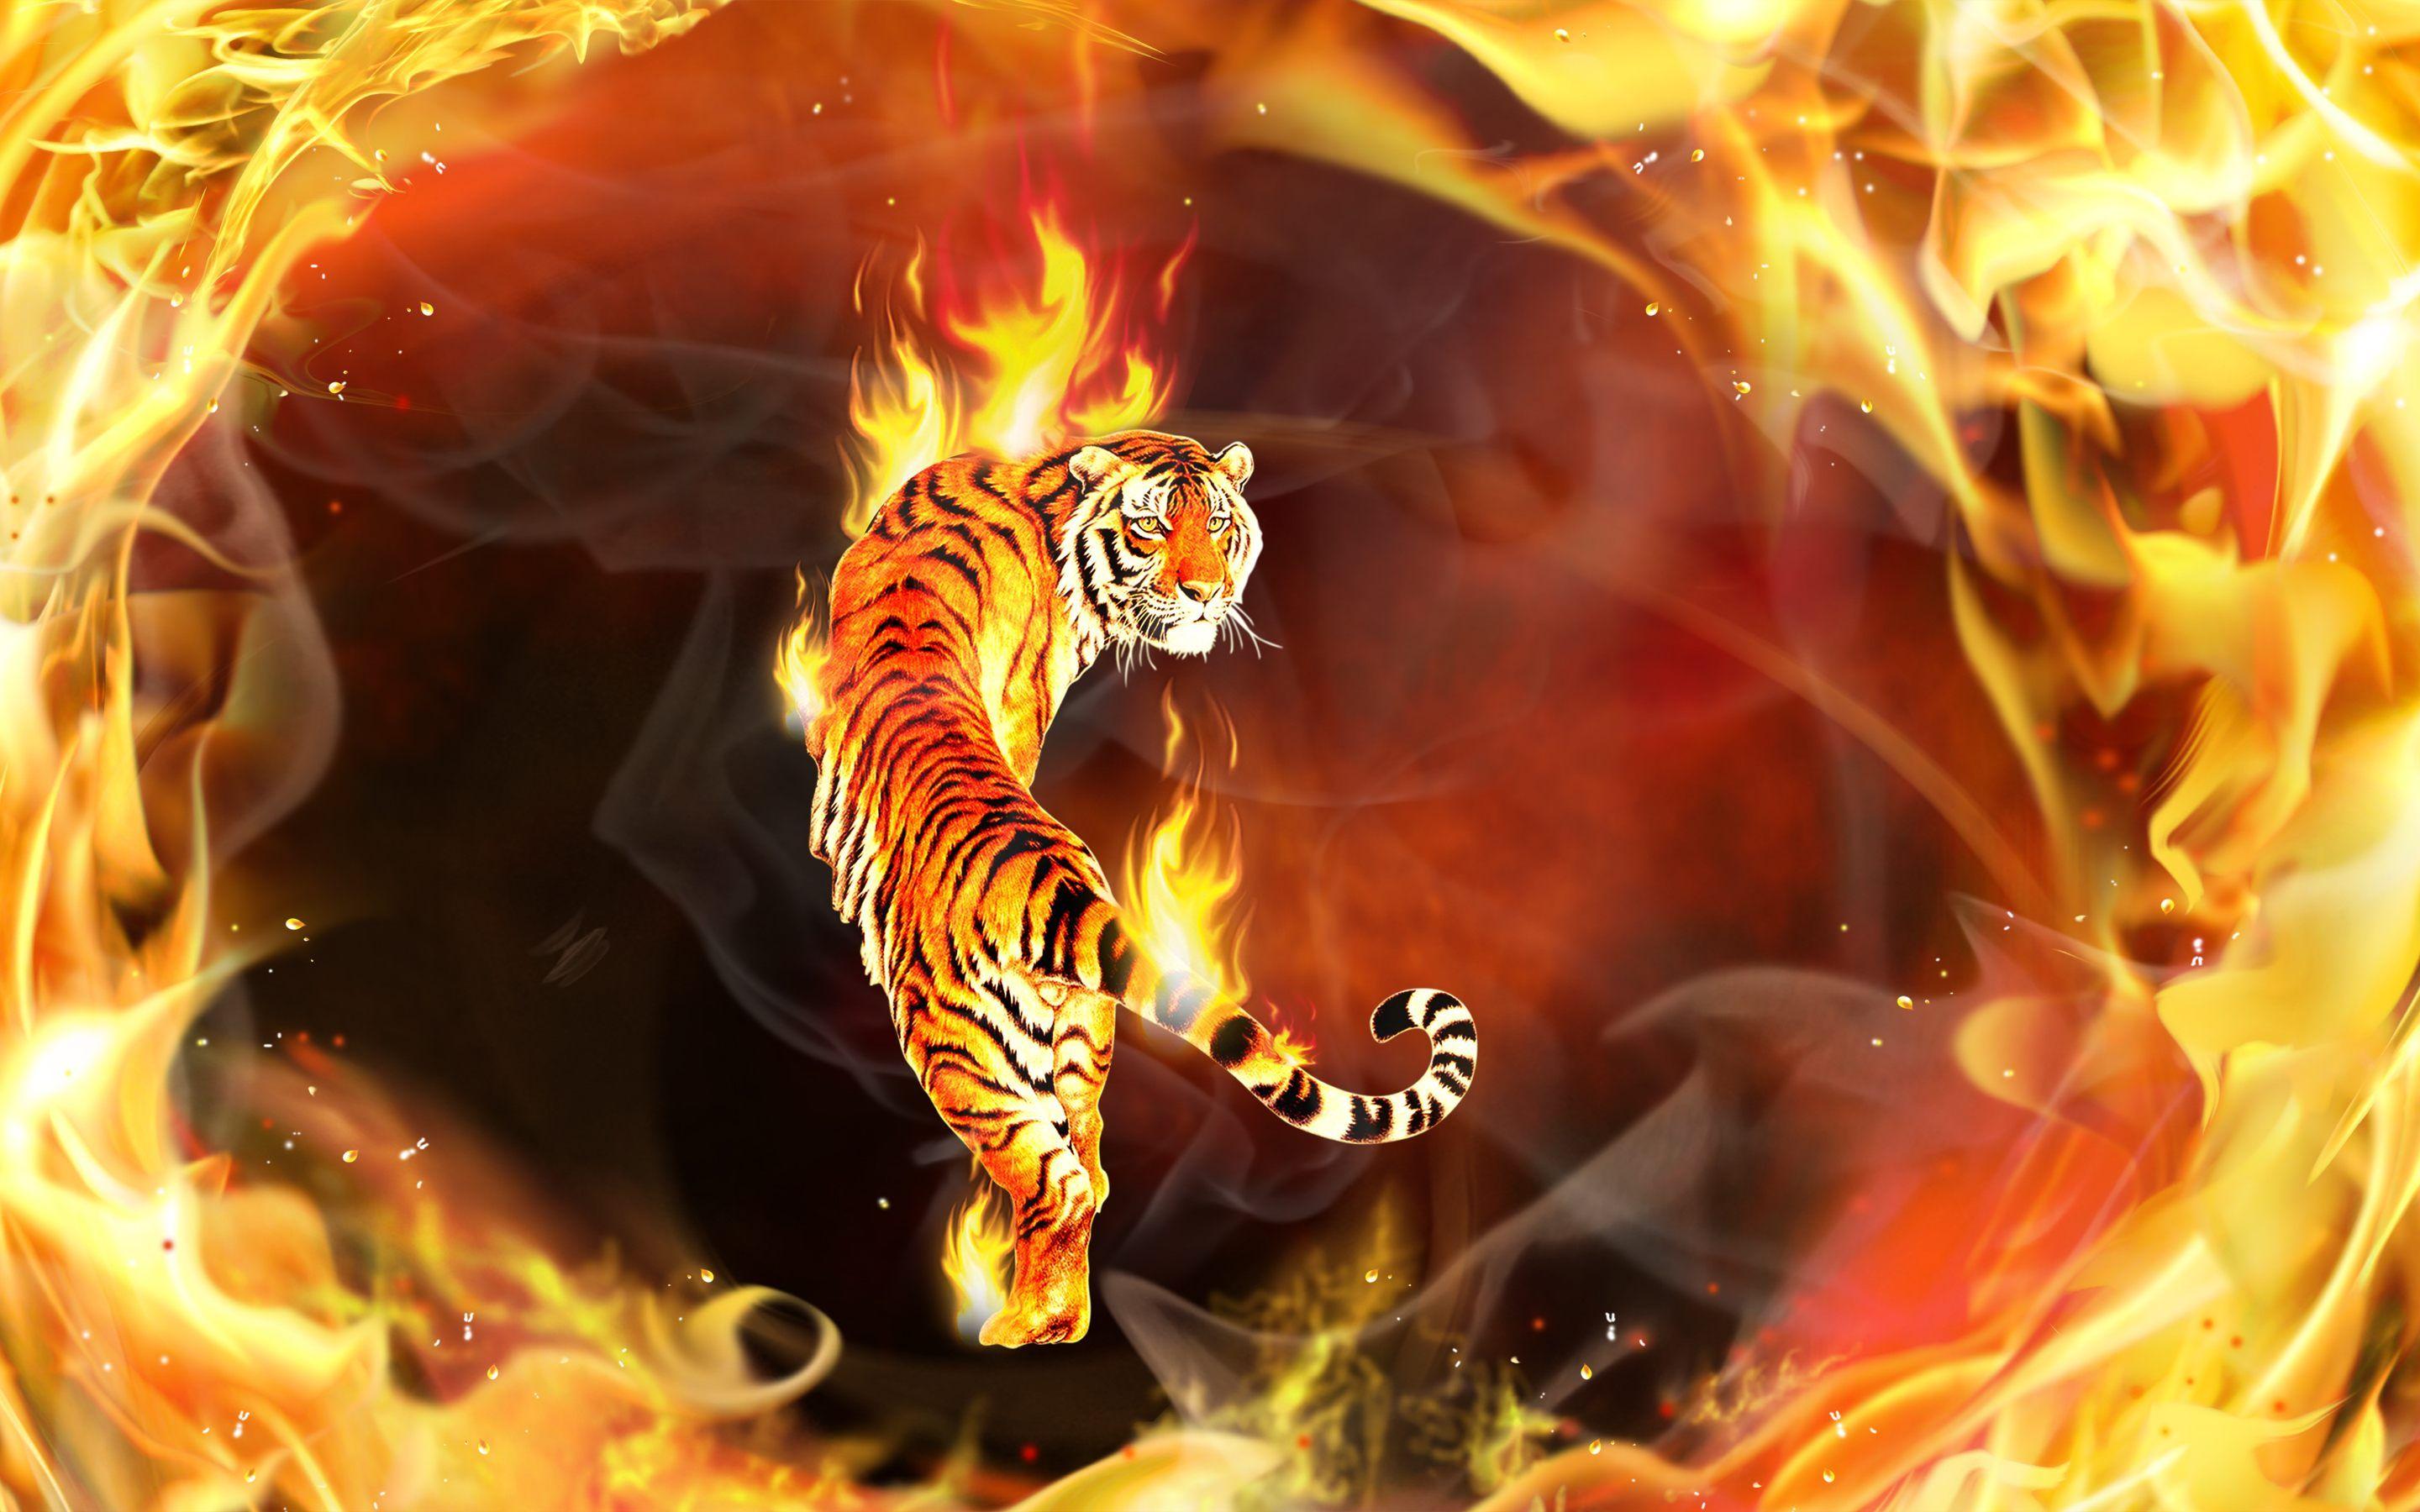 Fire Tiger Fantasy Animal Wallpaper HD Download For Desktop. fondos